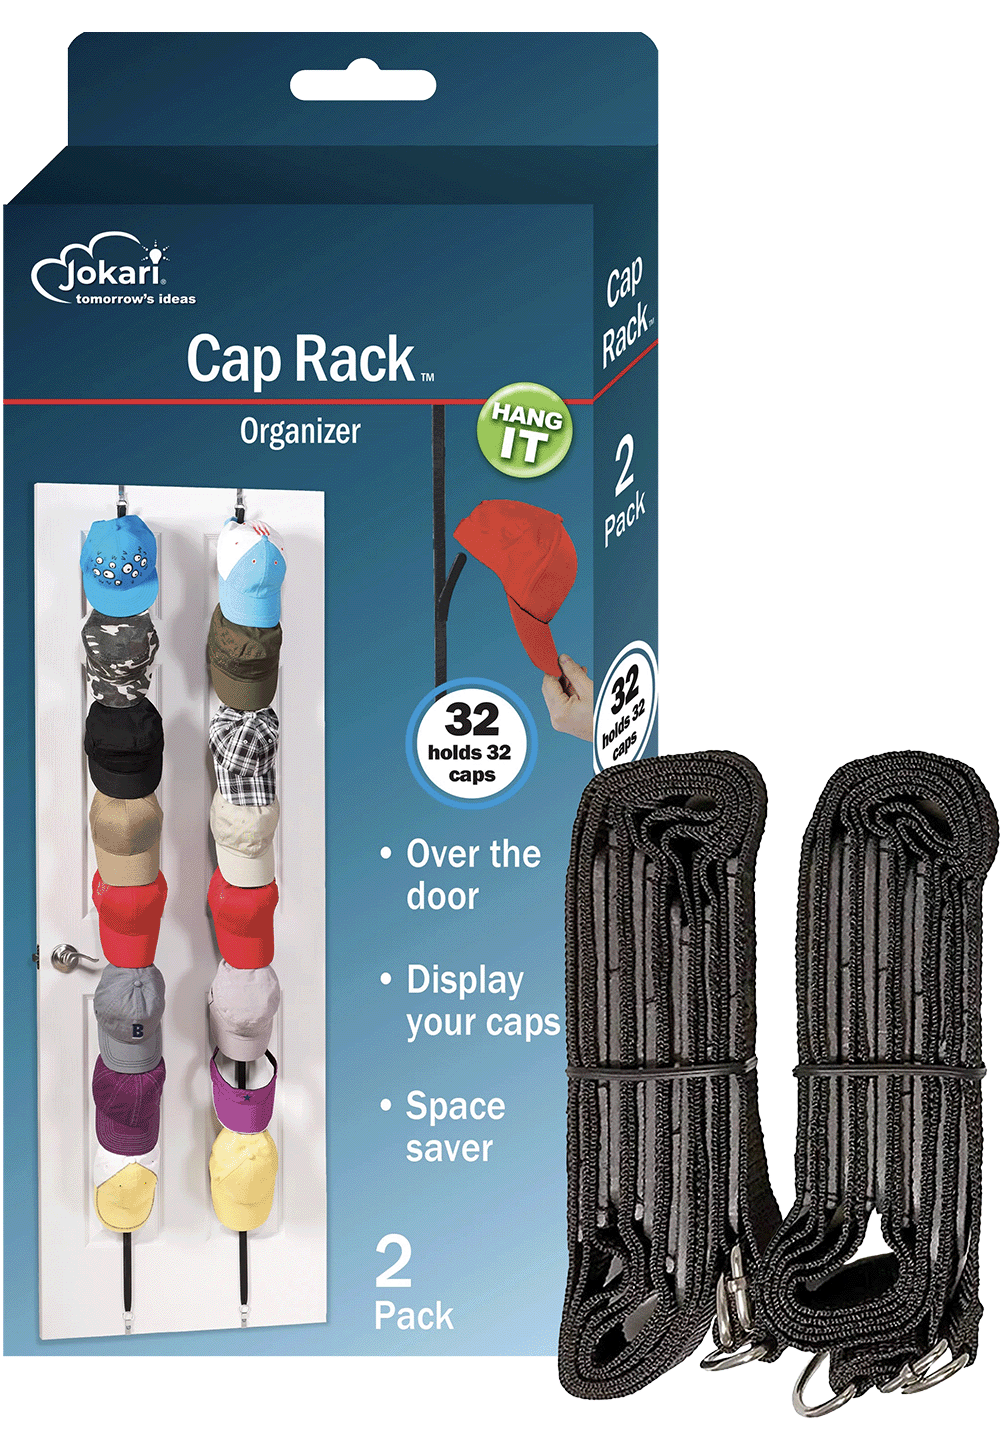 Davison Produced Product Invention: The Cap Rack